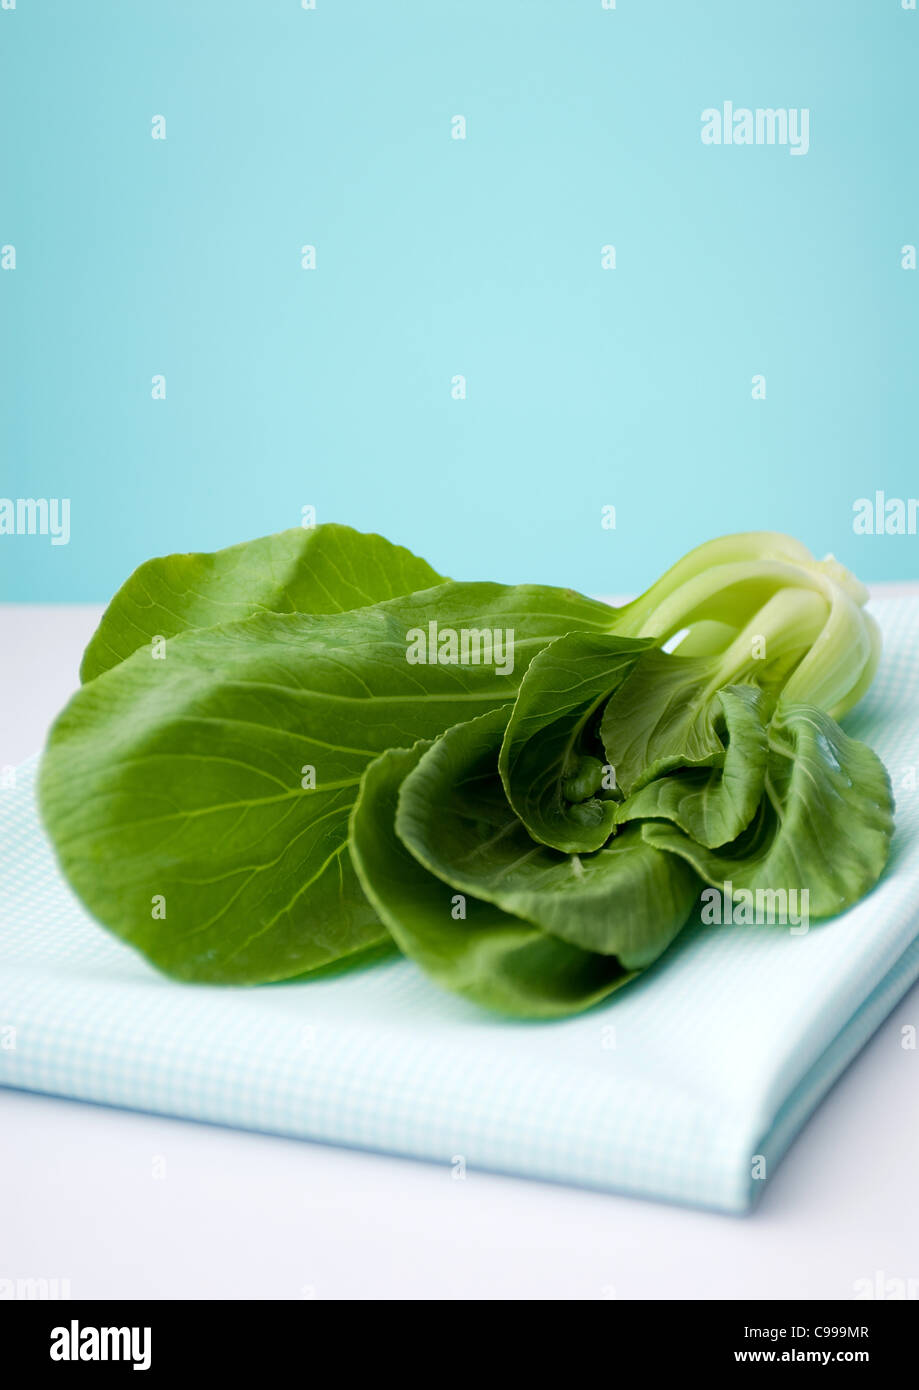 Bok choy (Brassica rapa - Chinese cabbage) Stock Photo